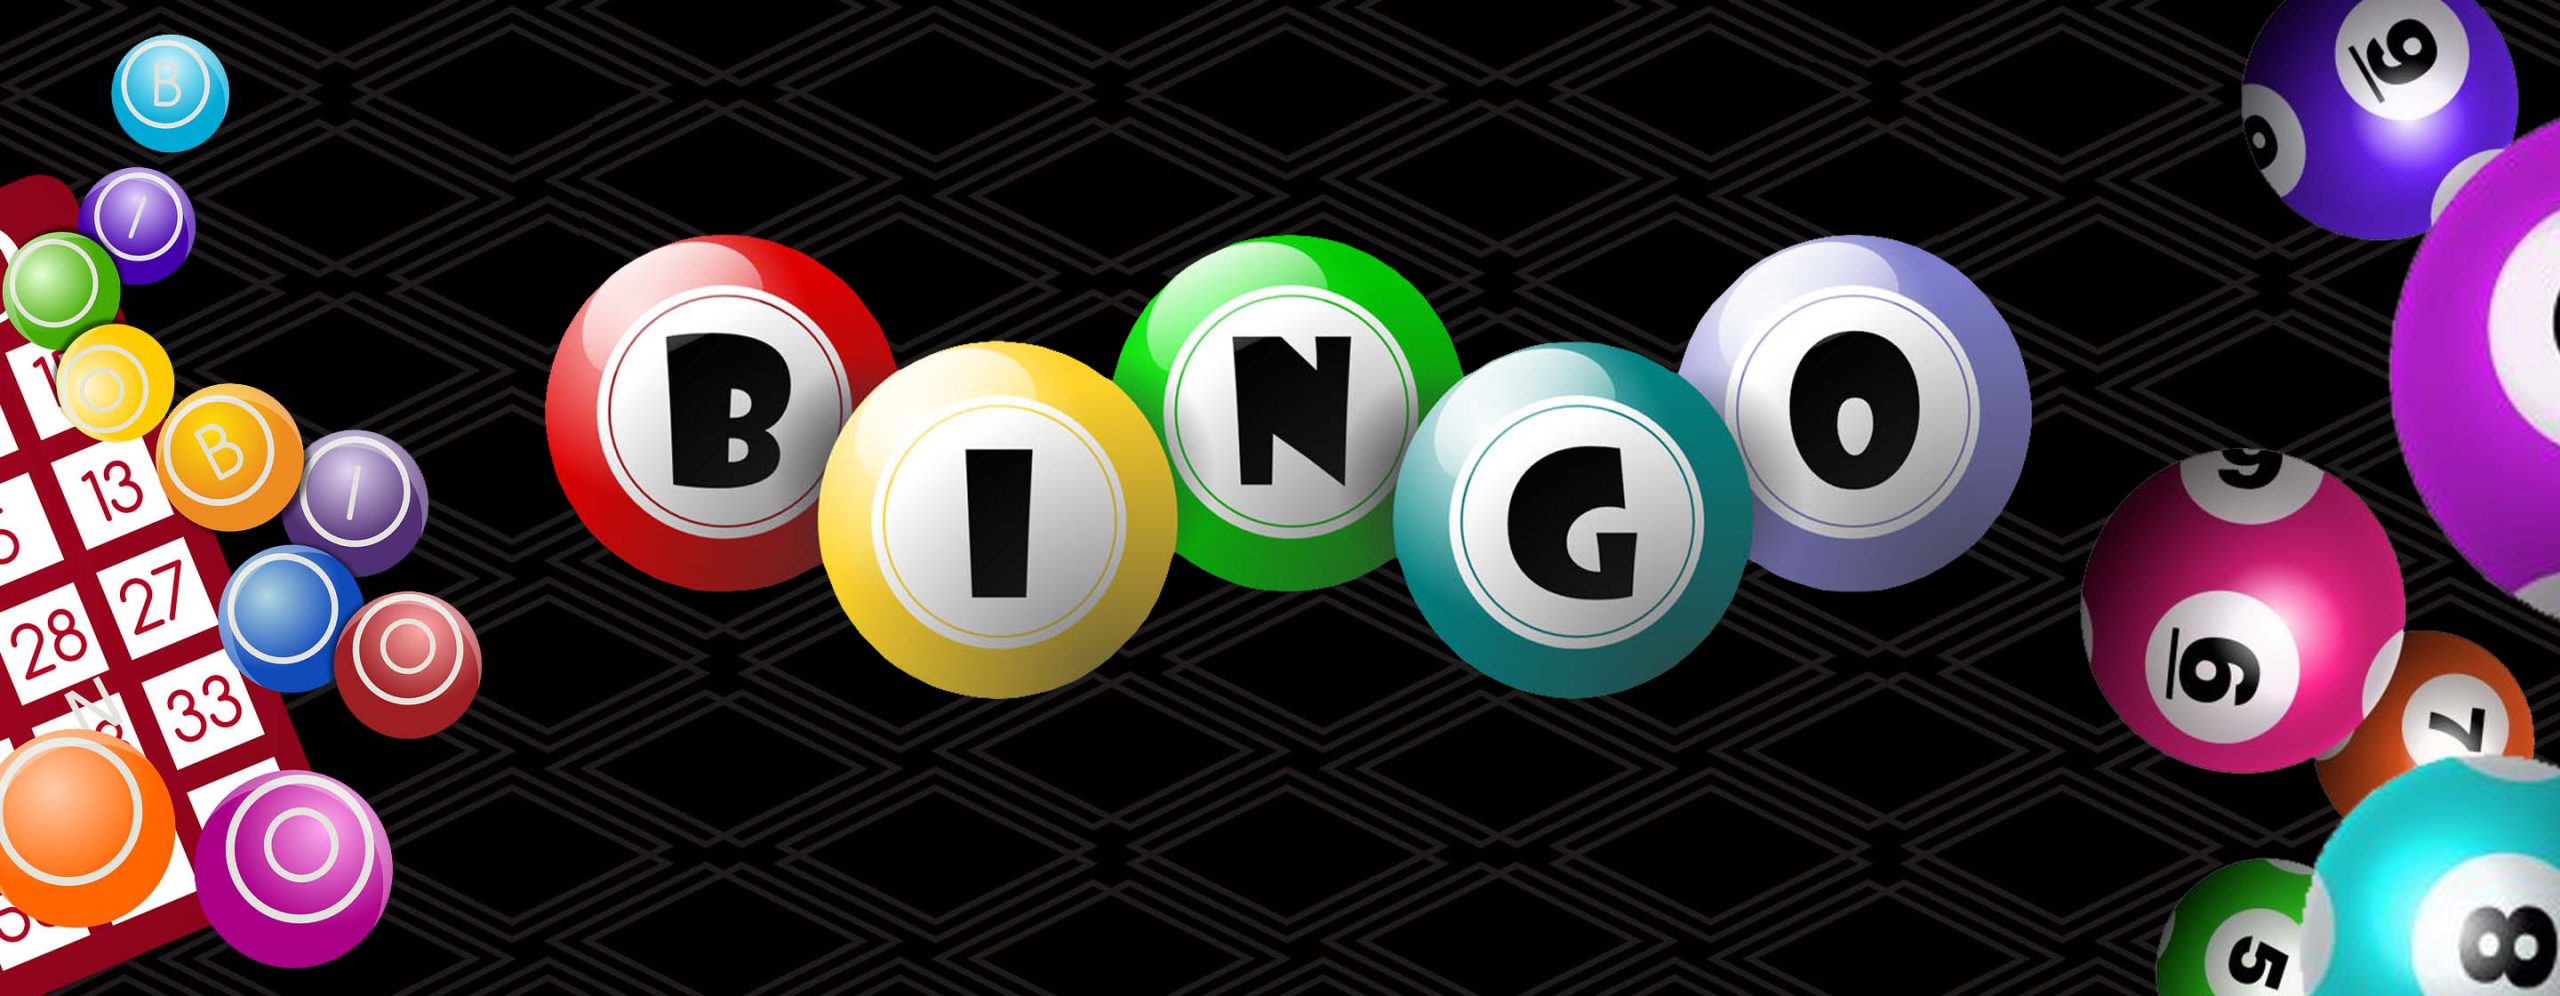 Download & Play Free Online Bingo Games